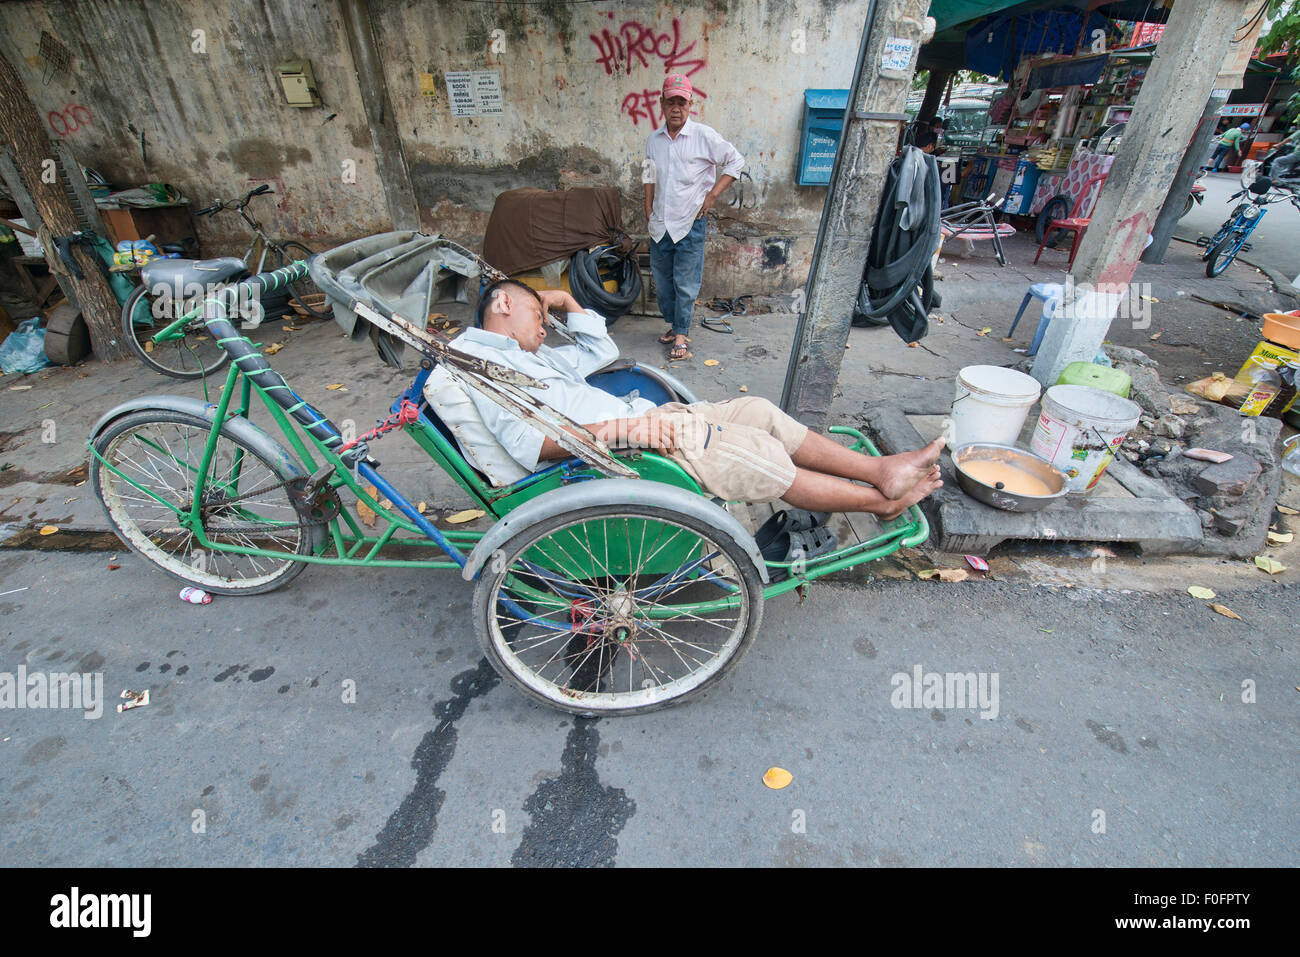 Cyclo driver sleeping in Phnom Penh, Cambodia Stock Photo